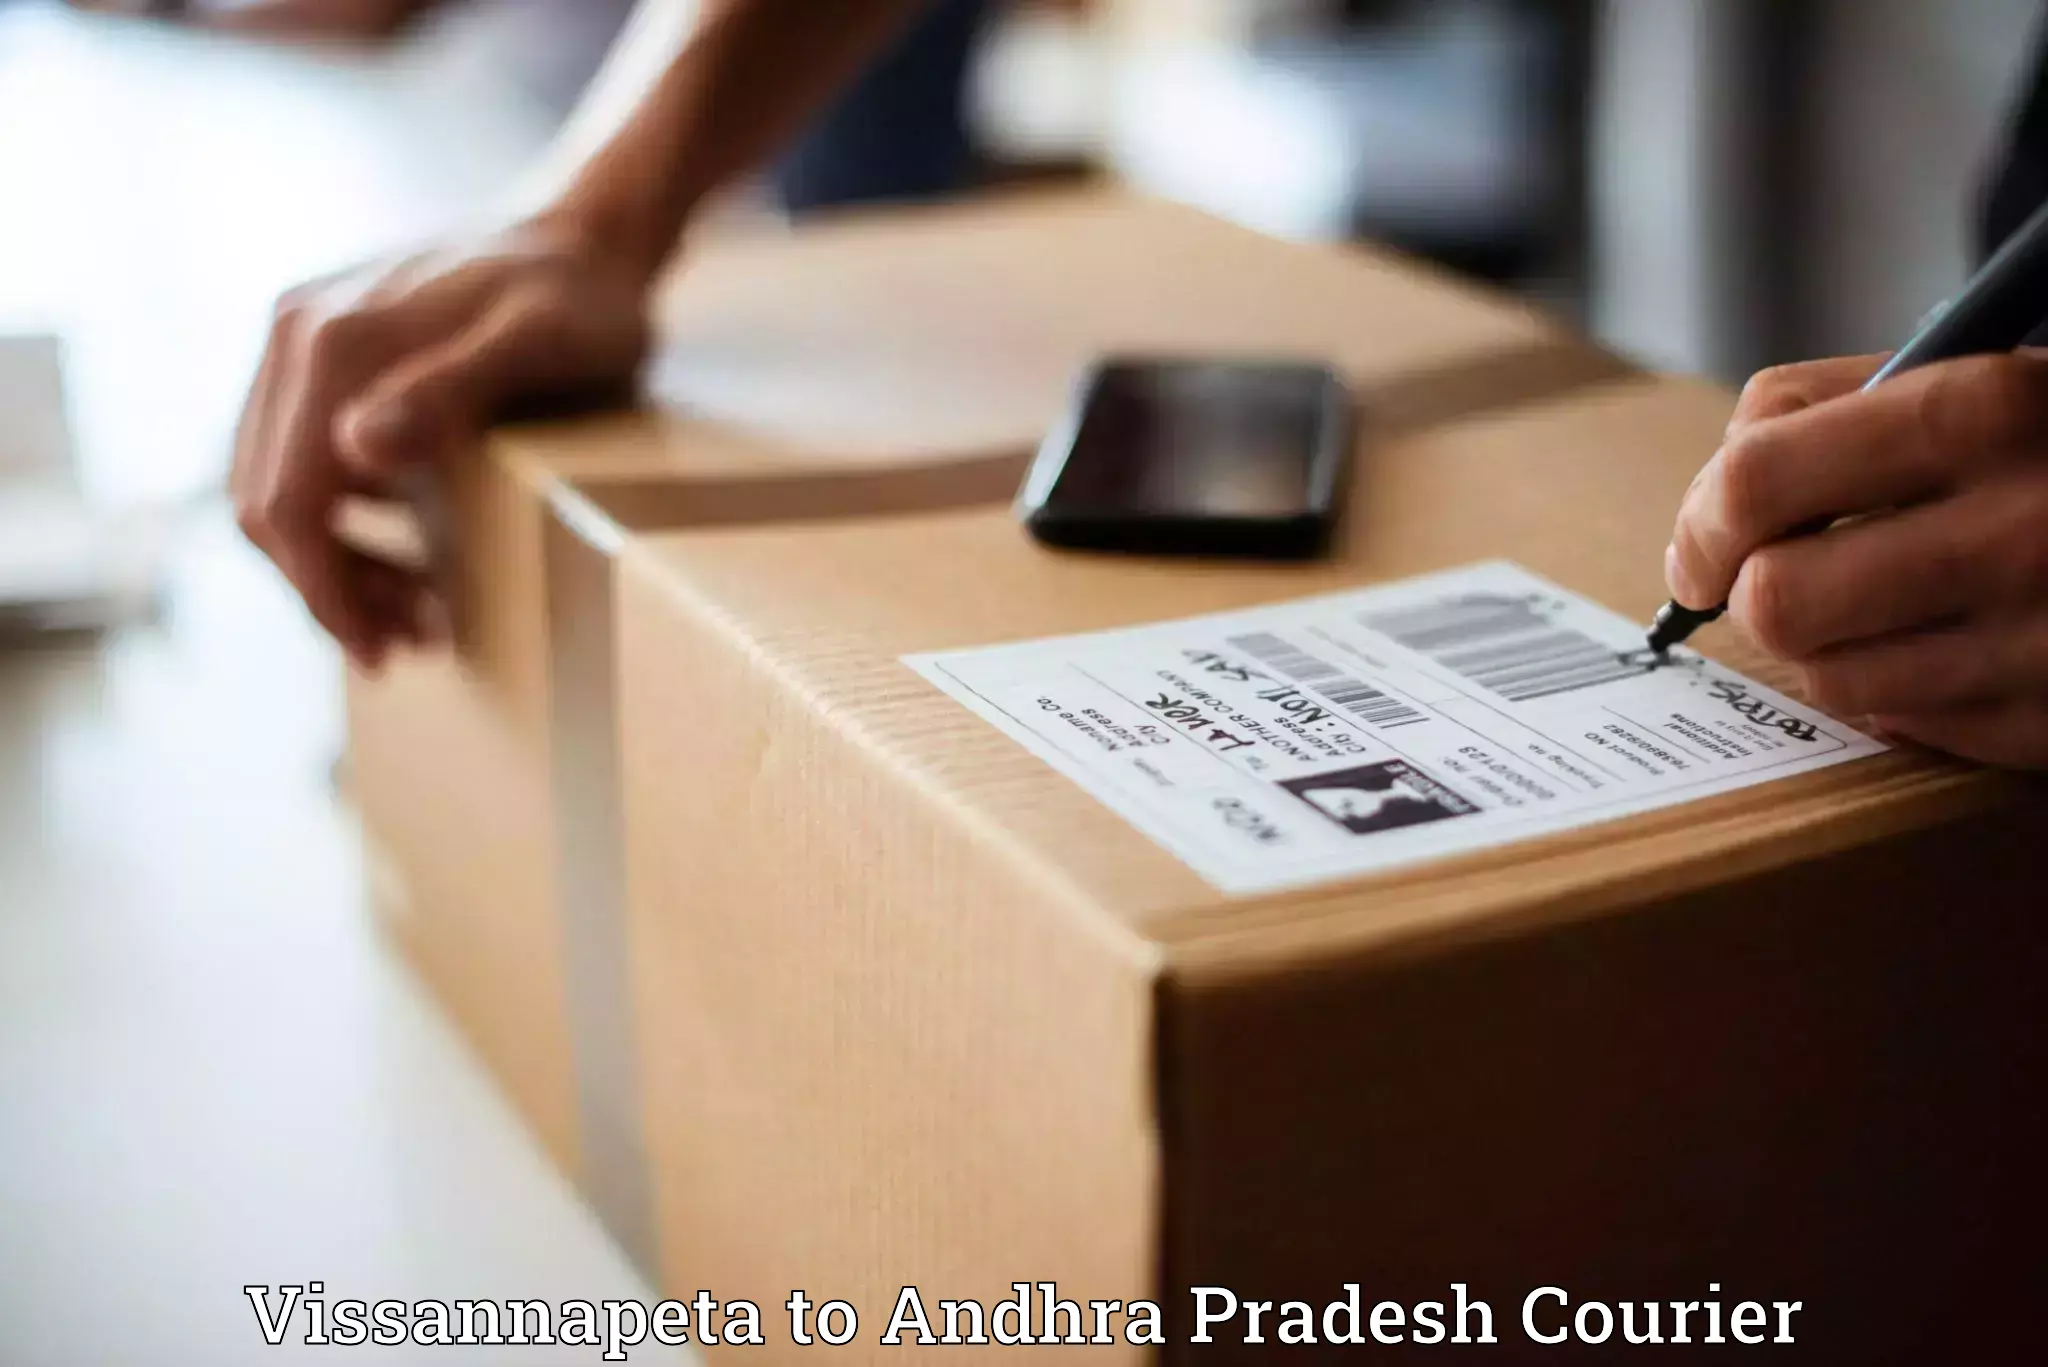 Customized delivery options Vissannapeta to Annavaram